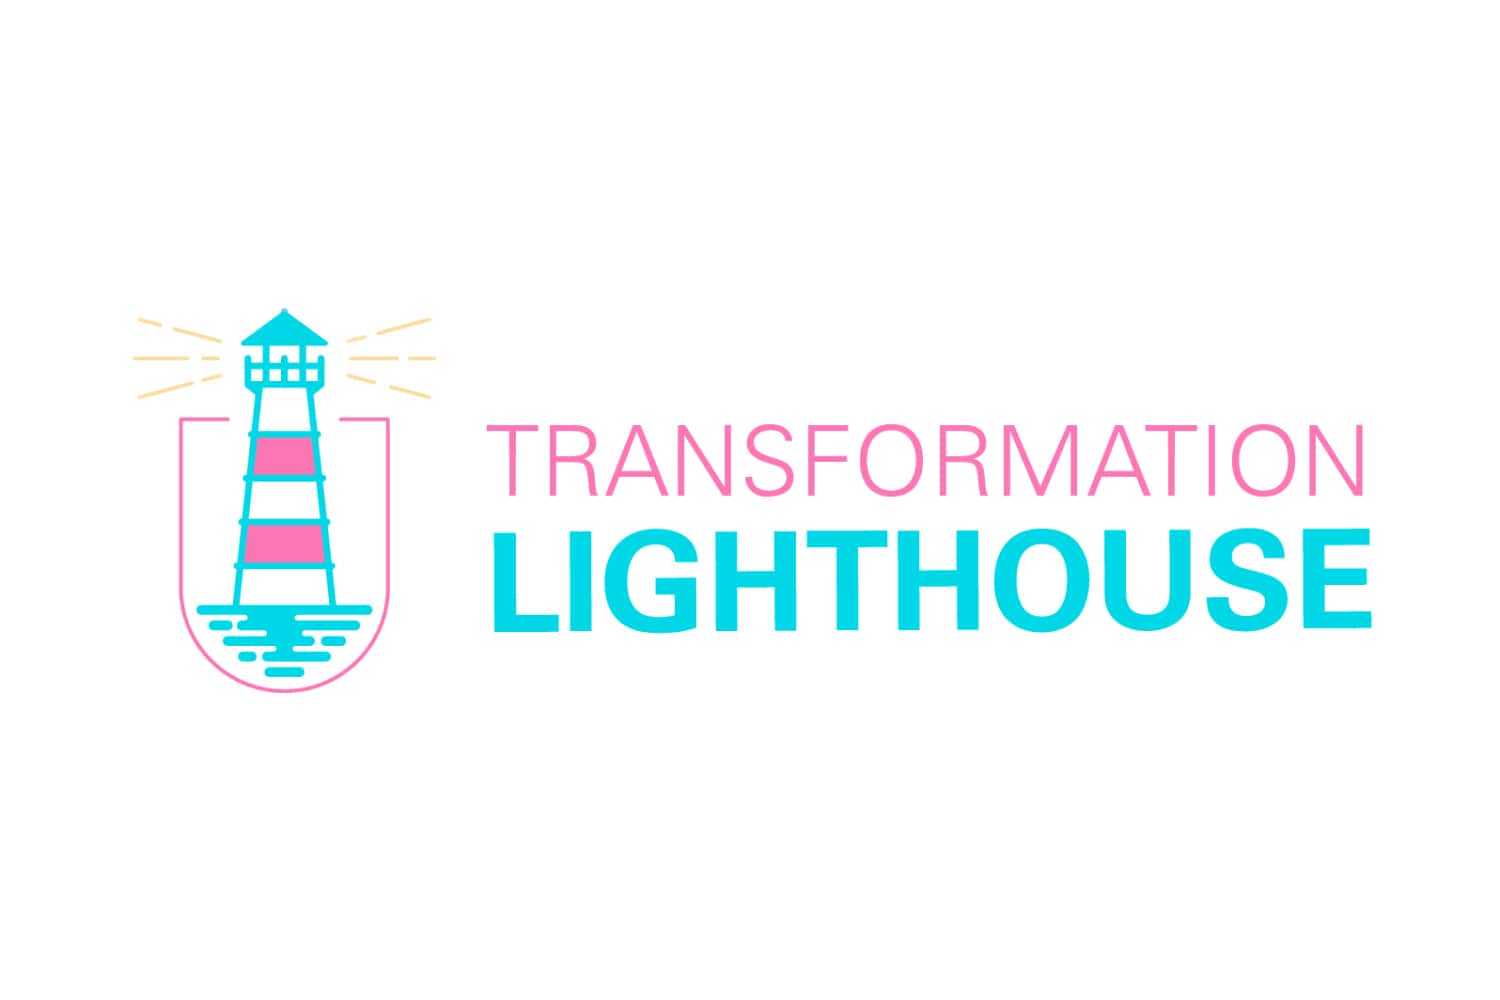 Transformation Lighthouse logo